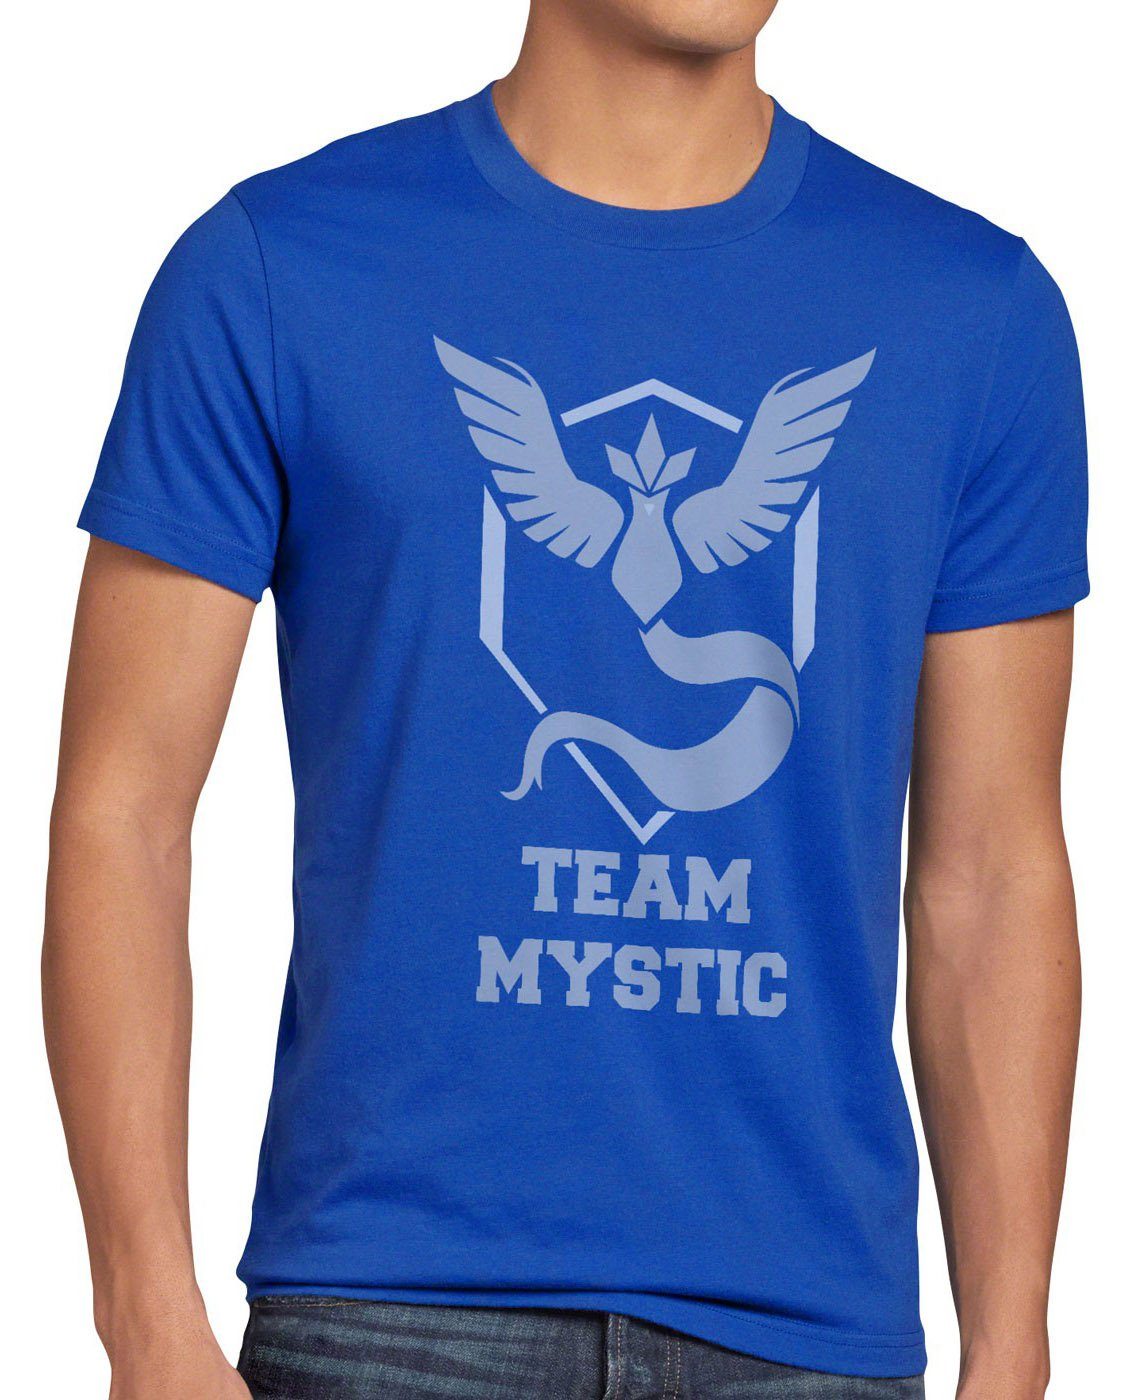 style3 eis Blau poke arena Team Team T-Shirt Weisheit Blue Print-Shirt Herren pokeball Mystic kampf